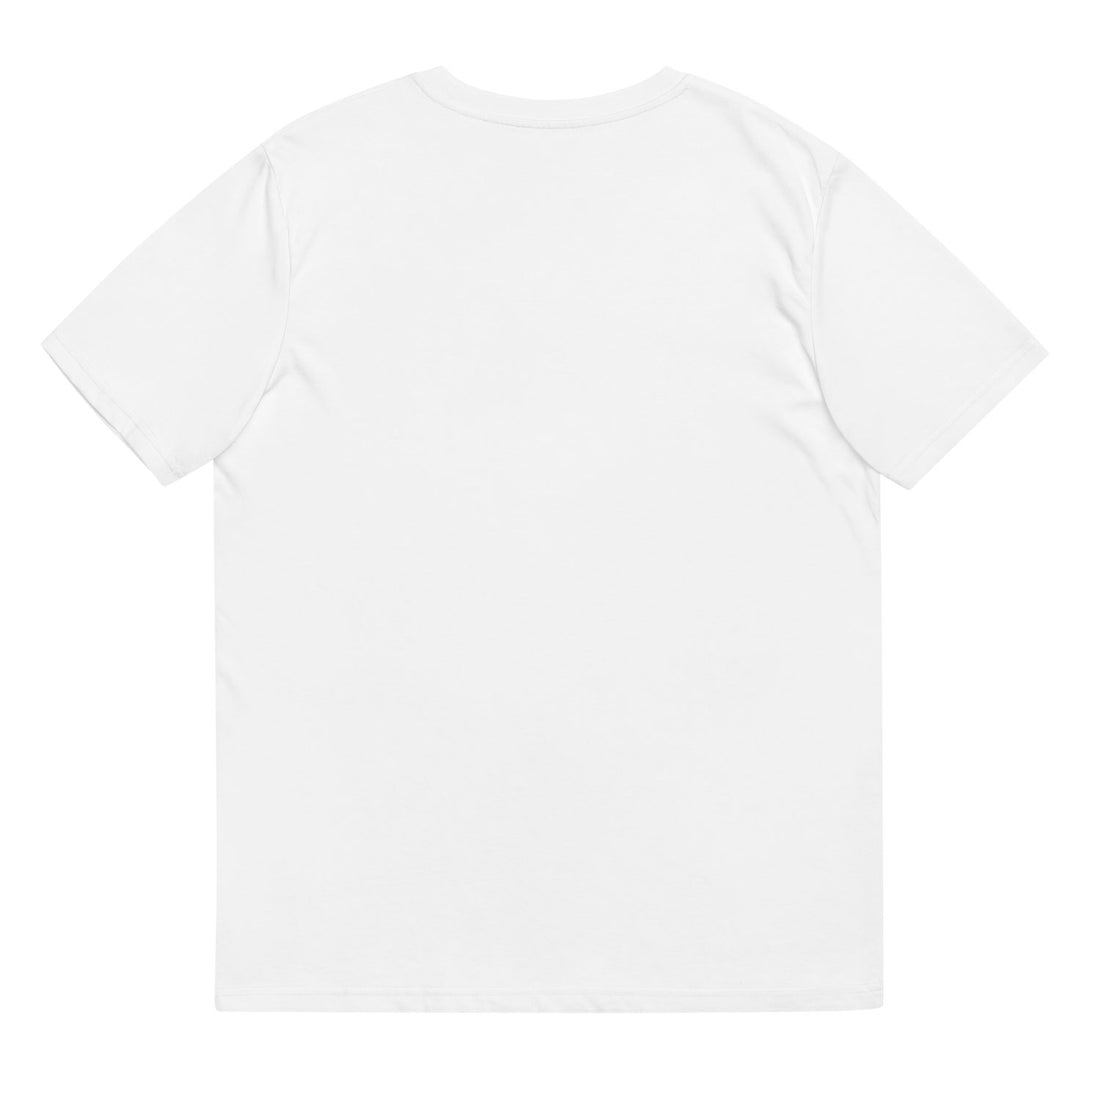 polkadot logo token tshirt white